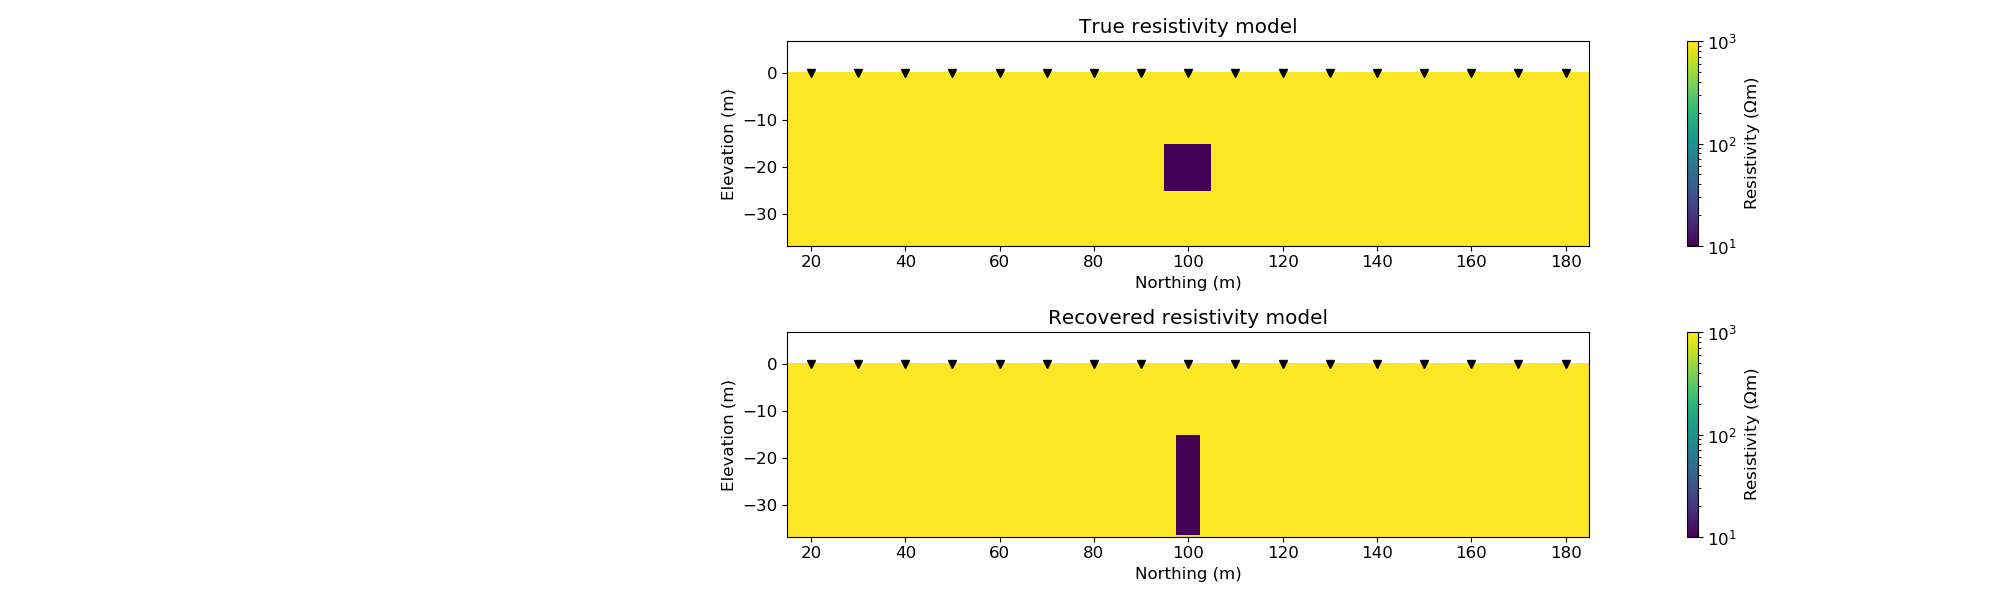 True resistivity model, Recovered resistivity model